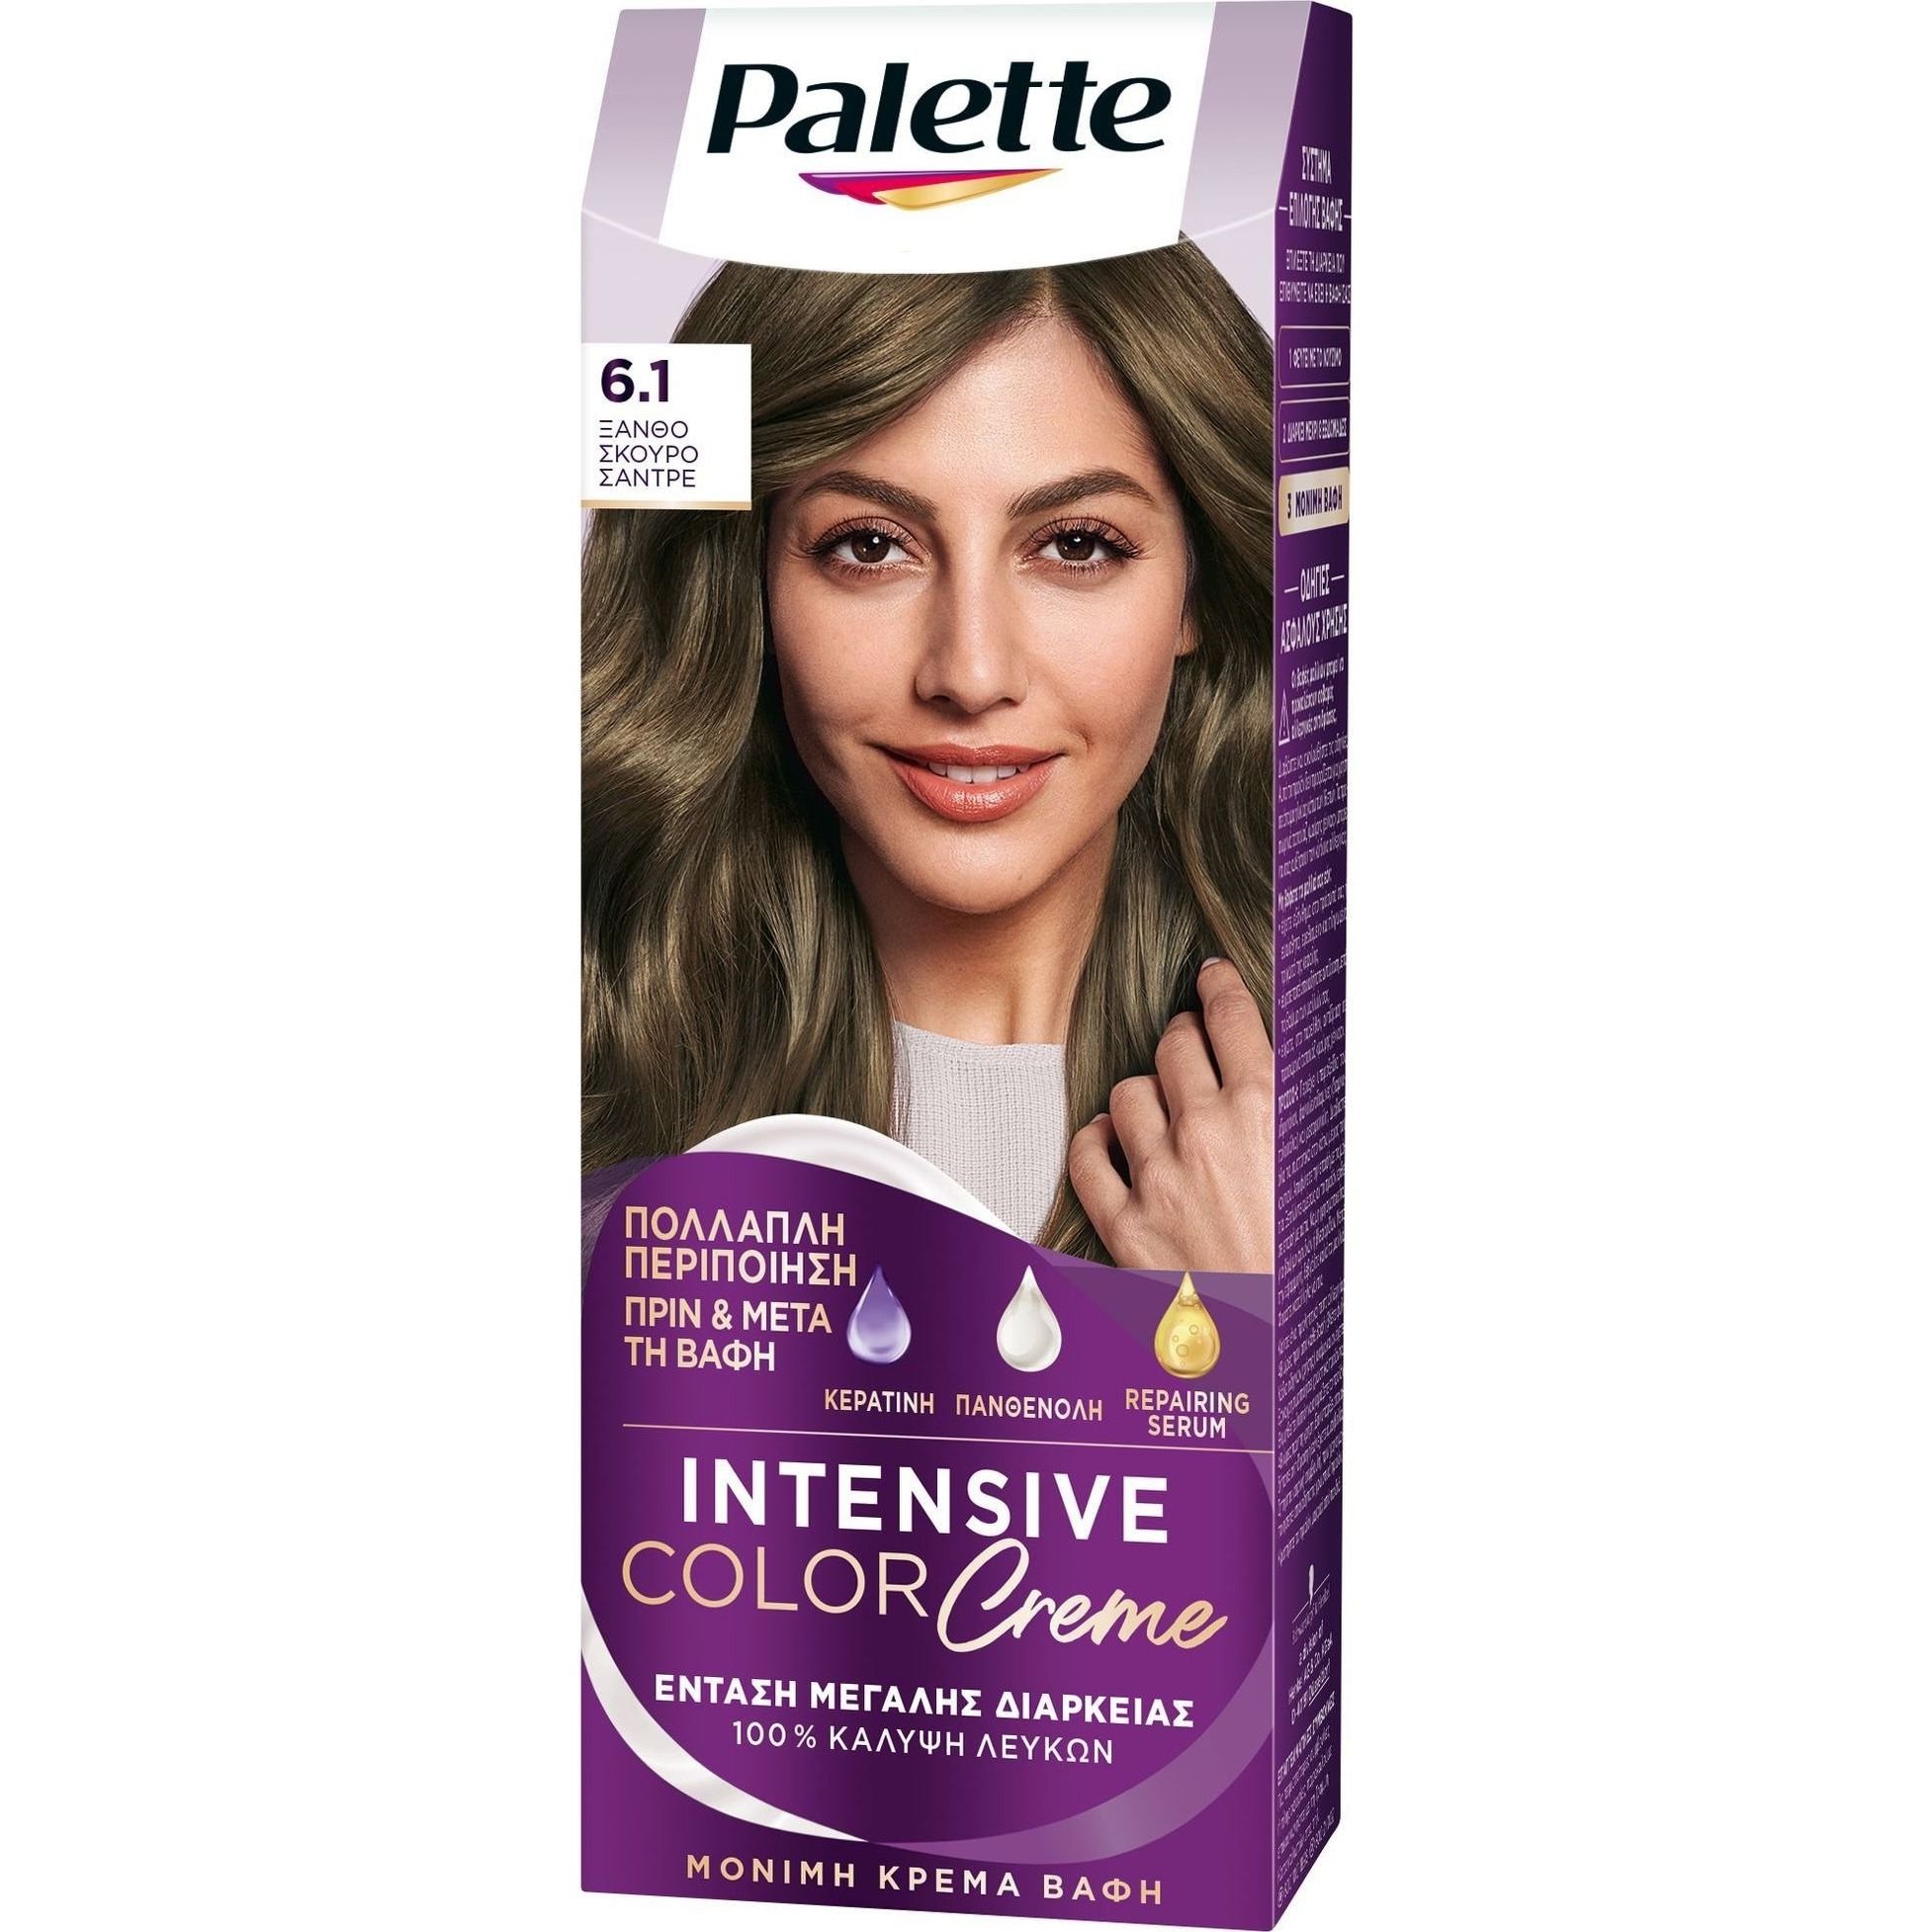 Schwarzkopf Palette Intensive Hair Color Creme Kit Μόνιμη Κρέμα Βαφή Μαλλιών για Έντονο Χρώμα Μεγάλης Διάρκειας & Περιποίηση 1 Τεμάχιο – 6.1 Ξανθό Σκούρο Σαντρέ